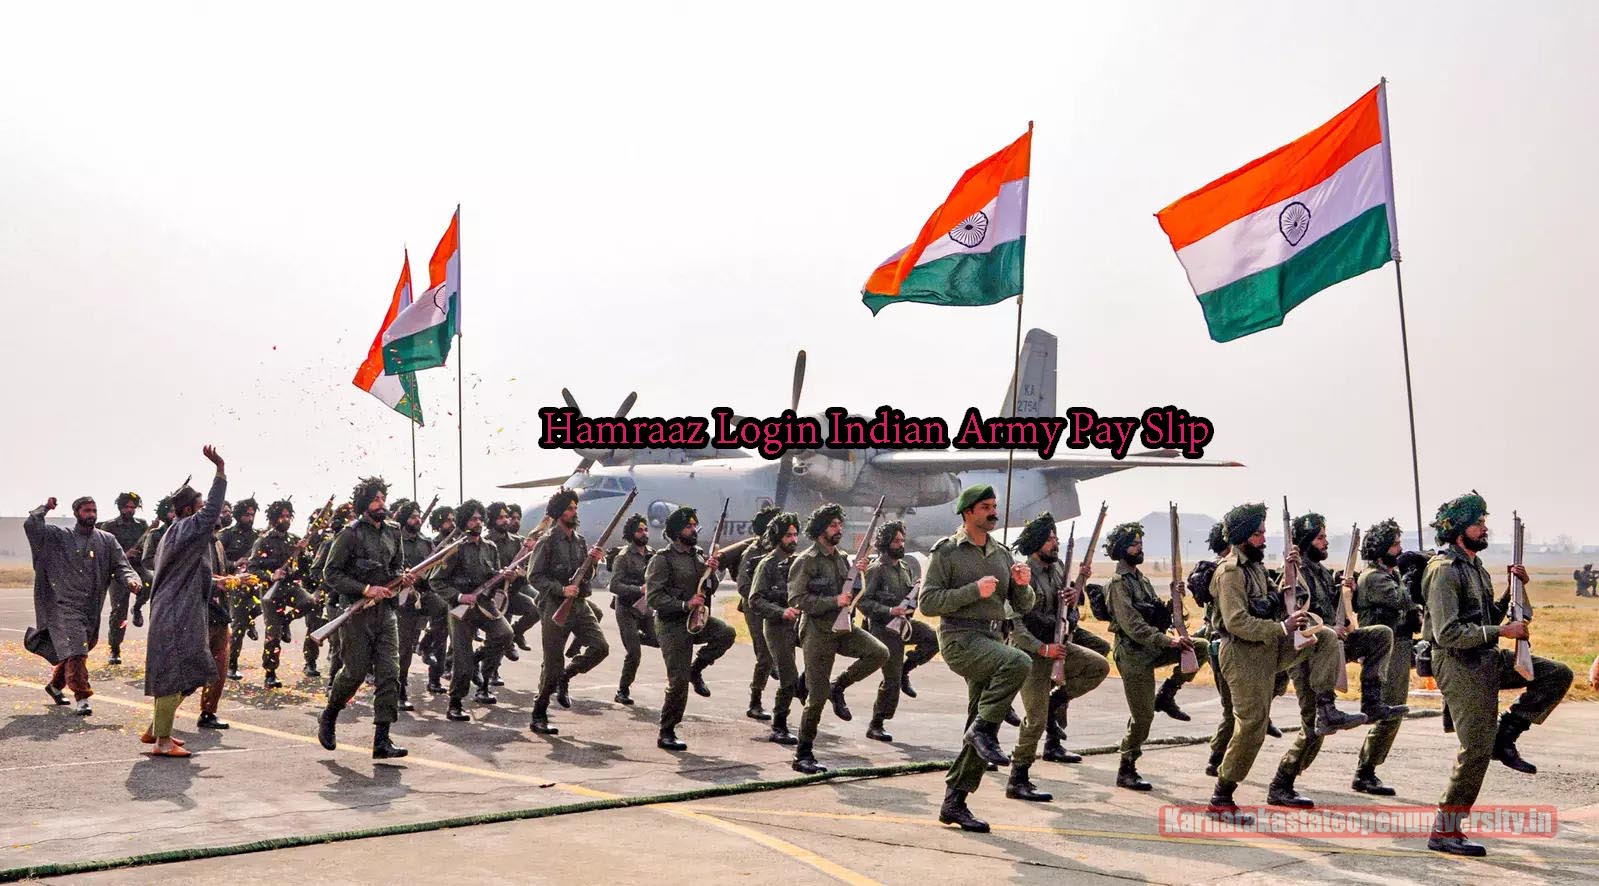 Hamraaz Login Indian Army Pay Slip